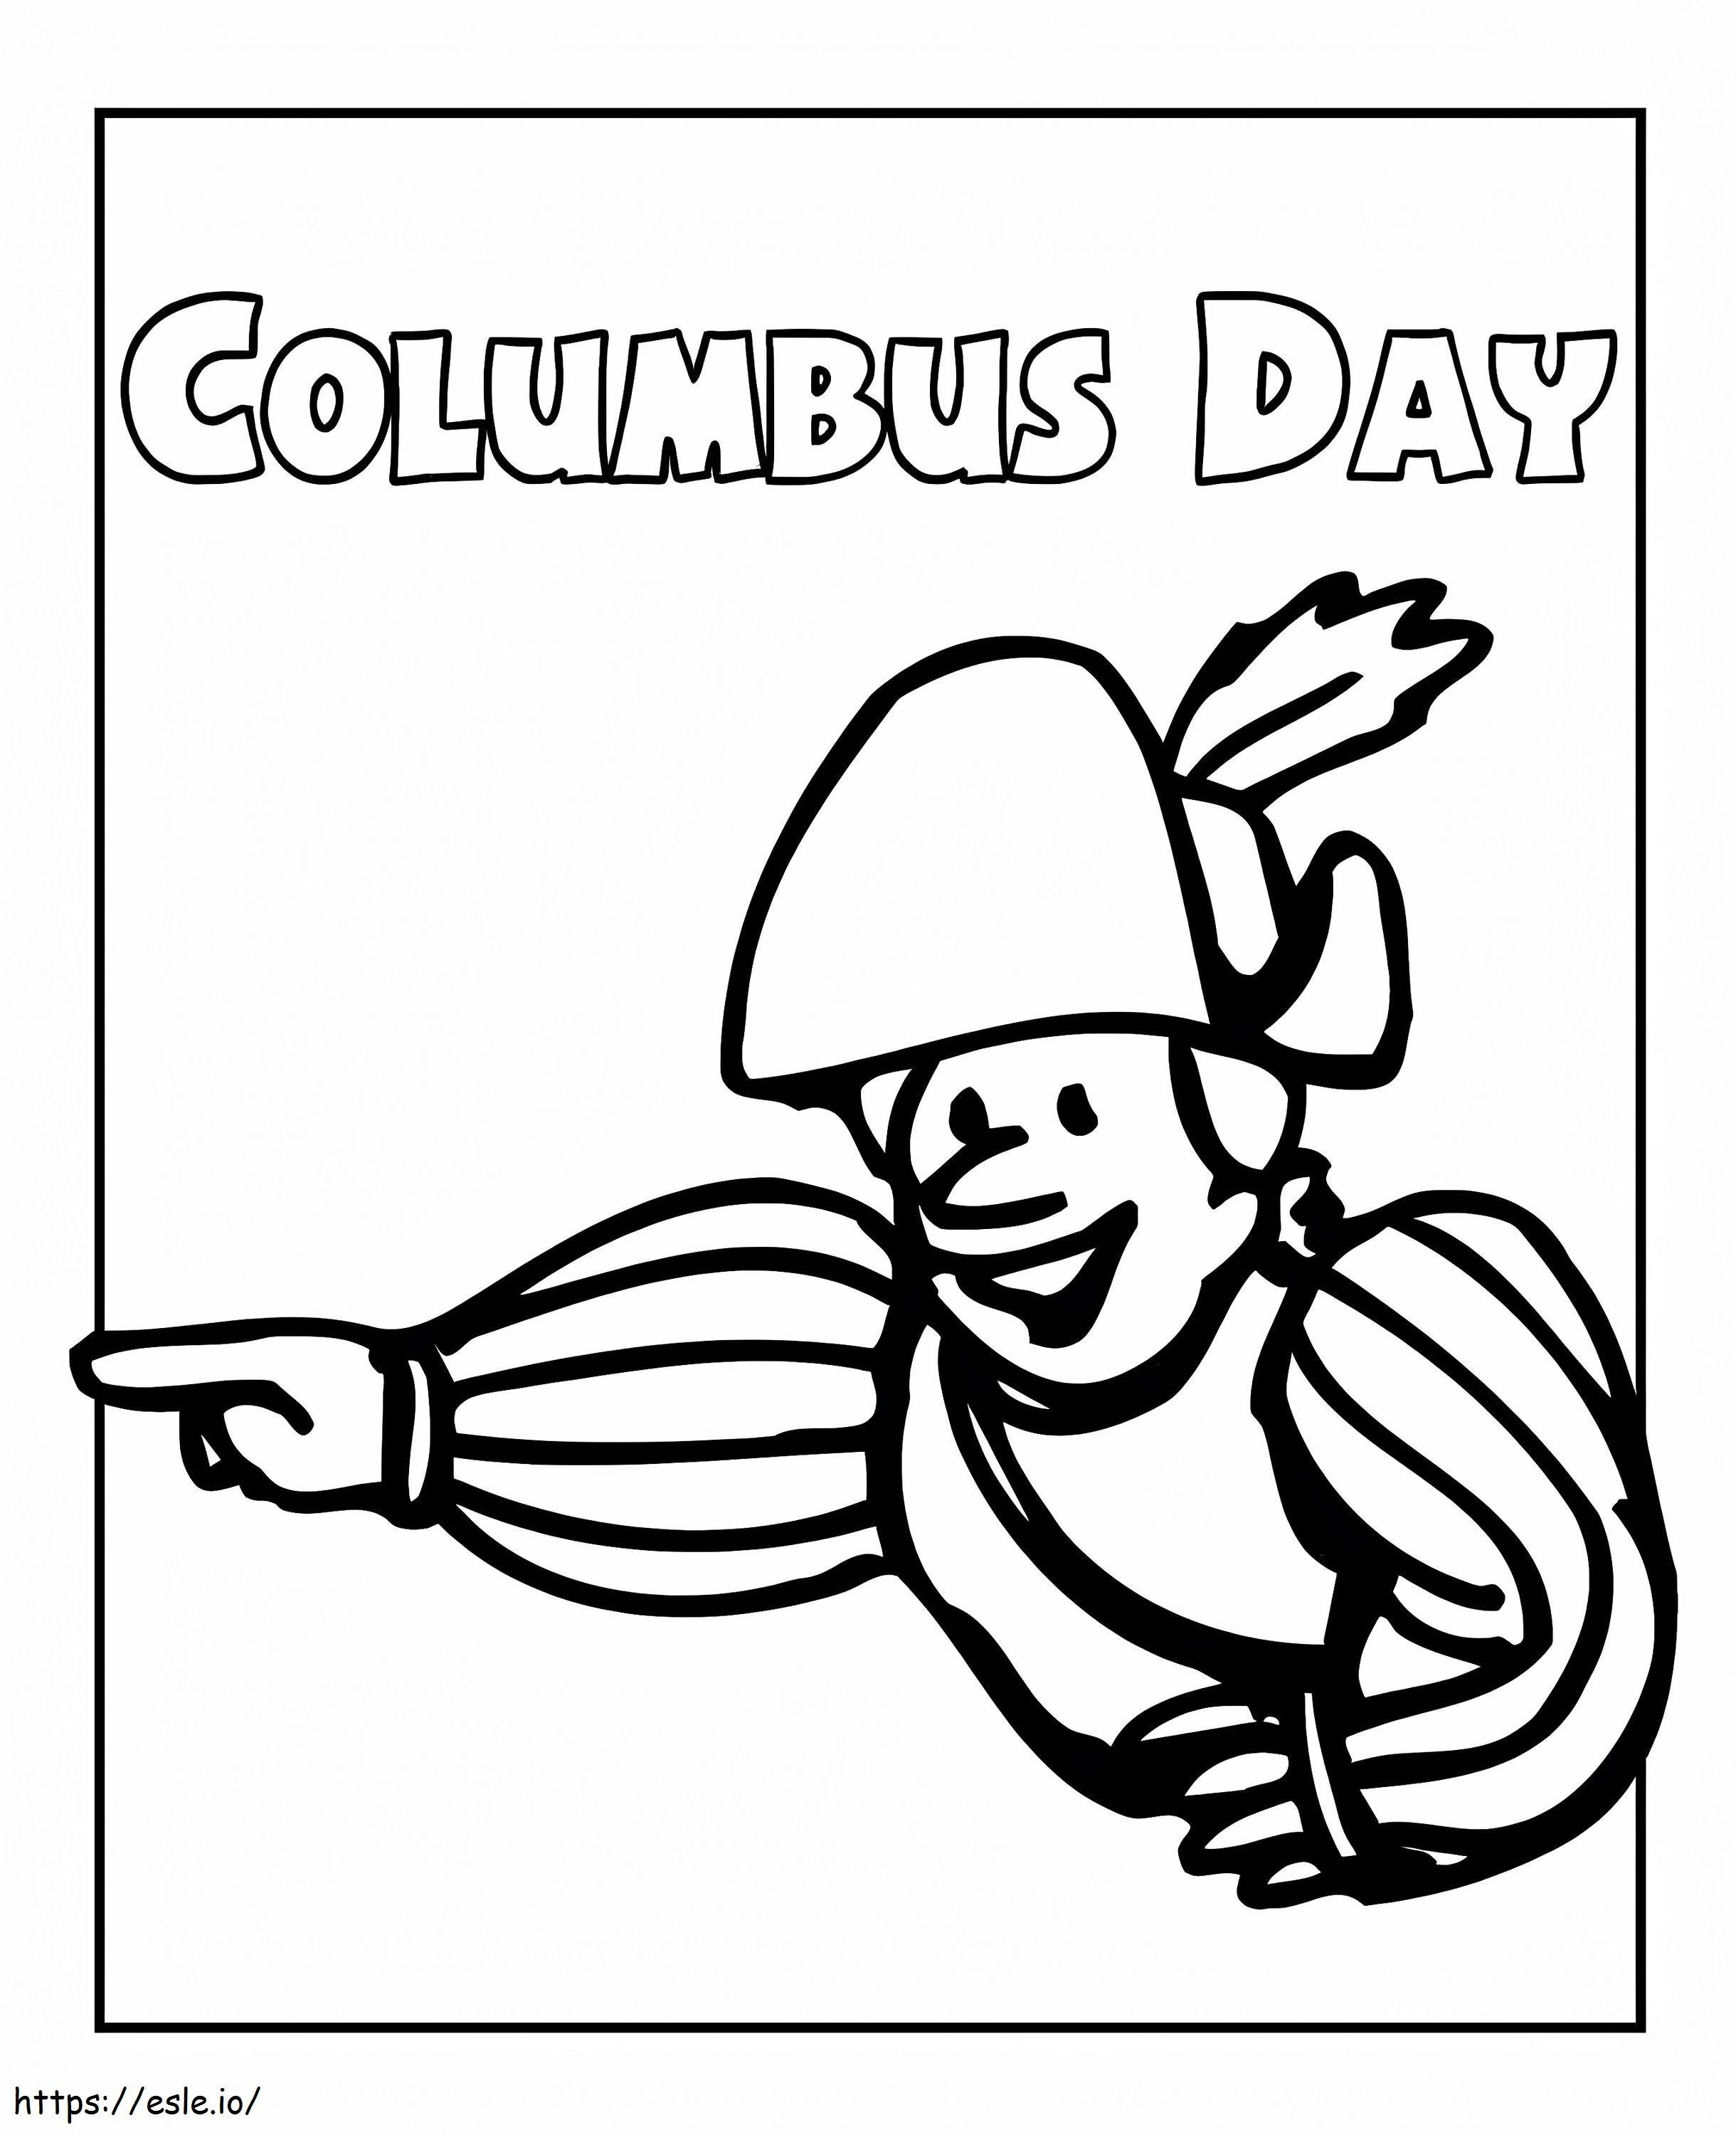 Columbus-dag 9 kleurplaat kleurplaat